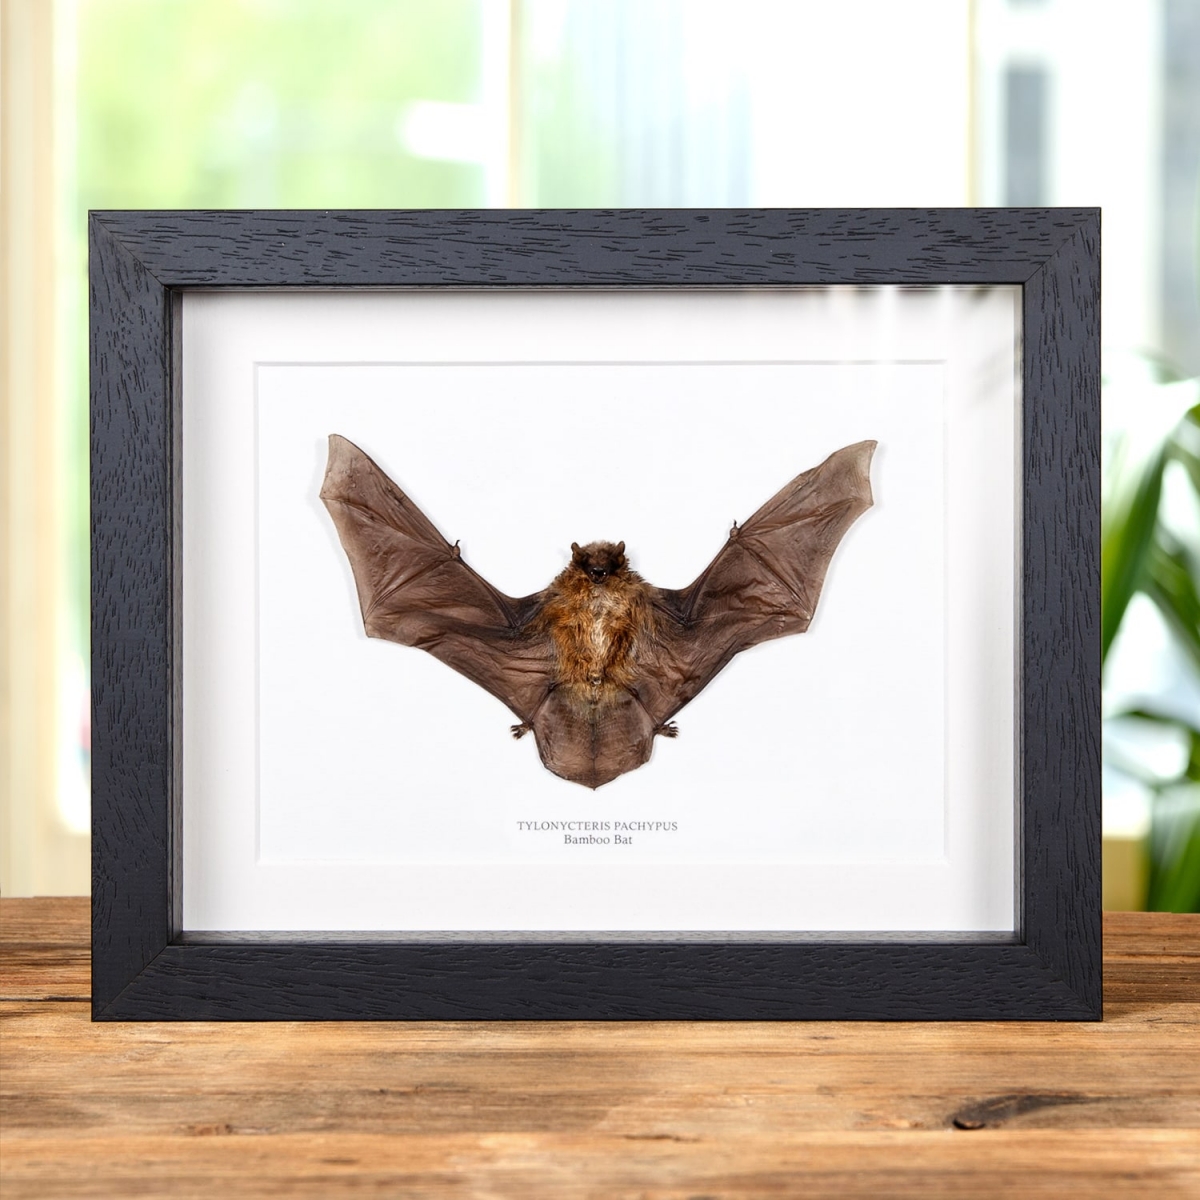 Minibeast Taxidermy Bamboo Bat in Box Frame (Tylonycteris pachypus)